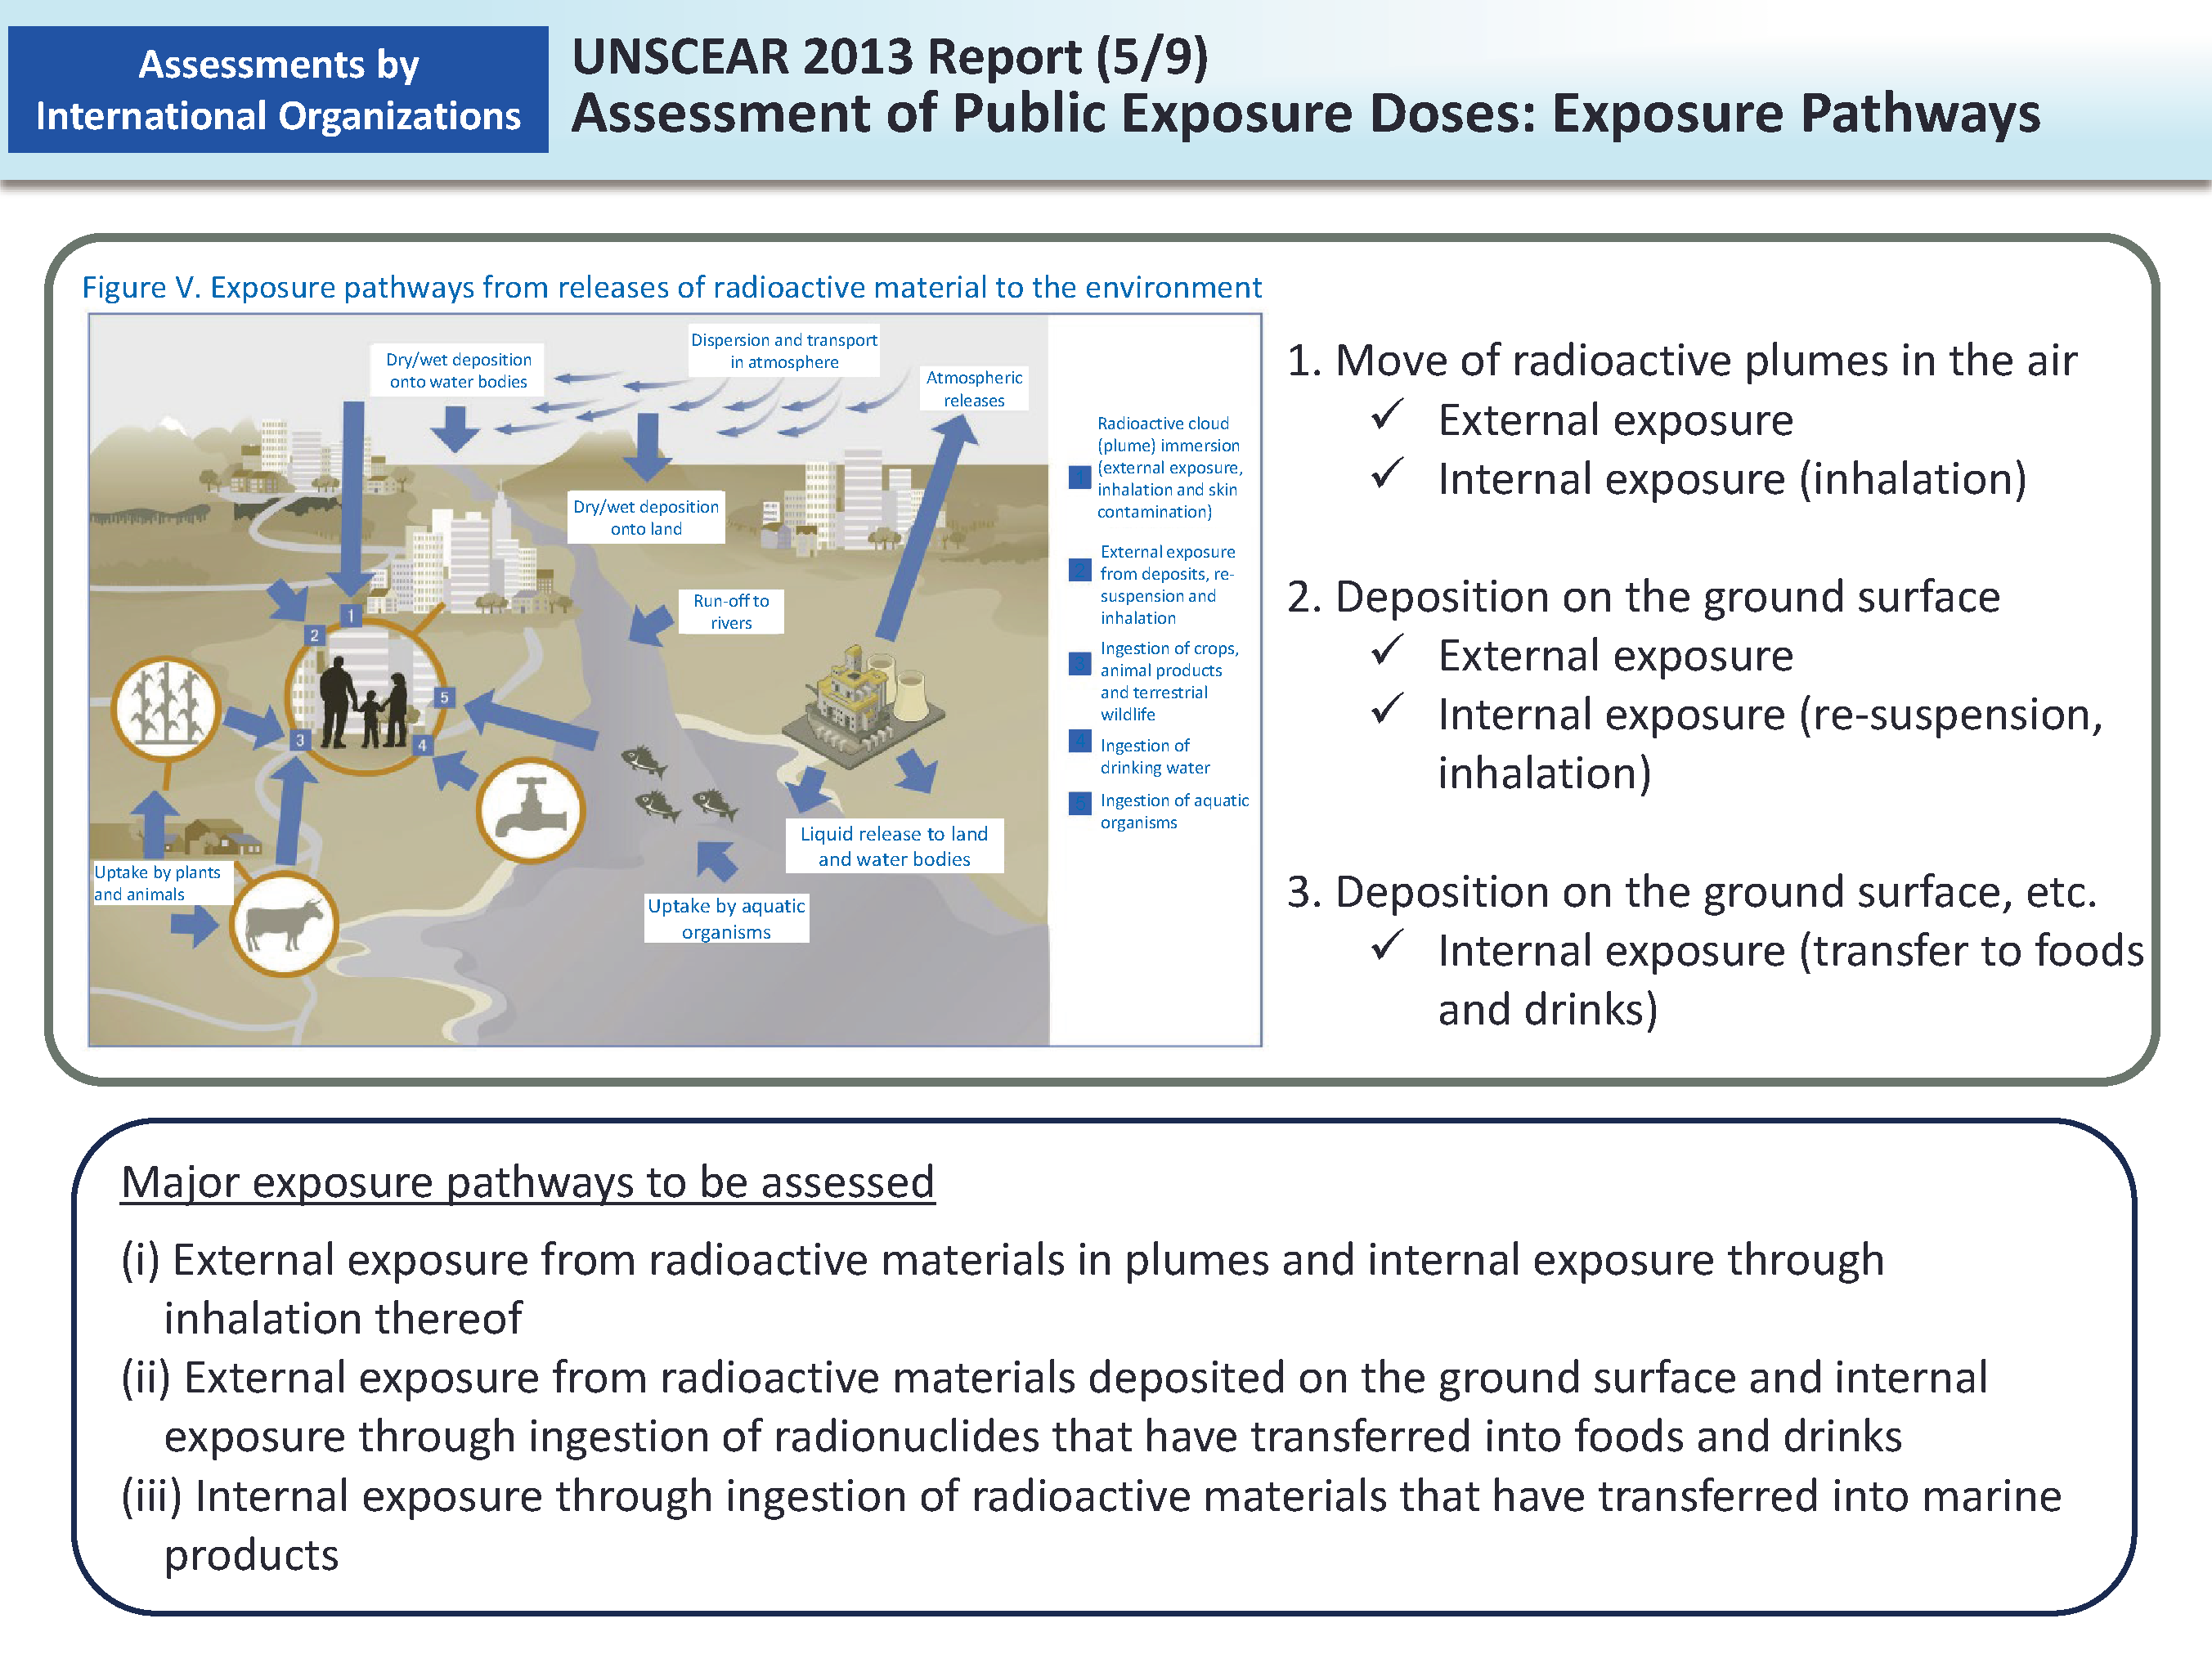 UNSCEAR 2013 Report (5/9) Assessment of Public Exposure Doses: Exposure Pathways_Figure